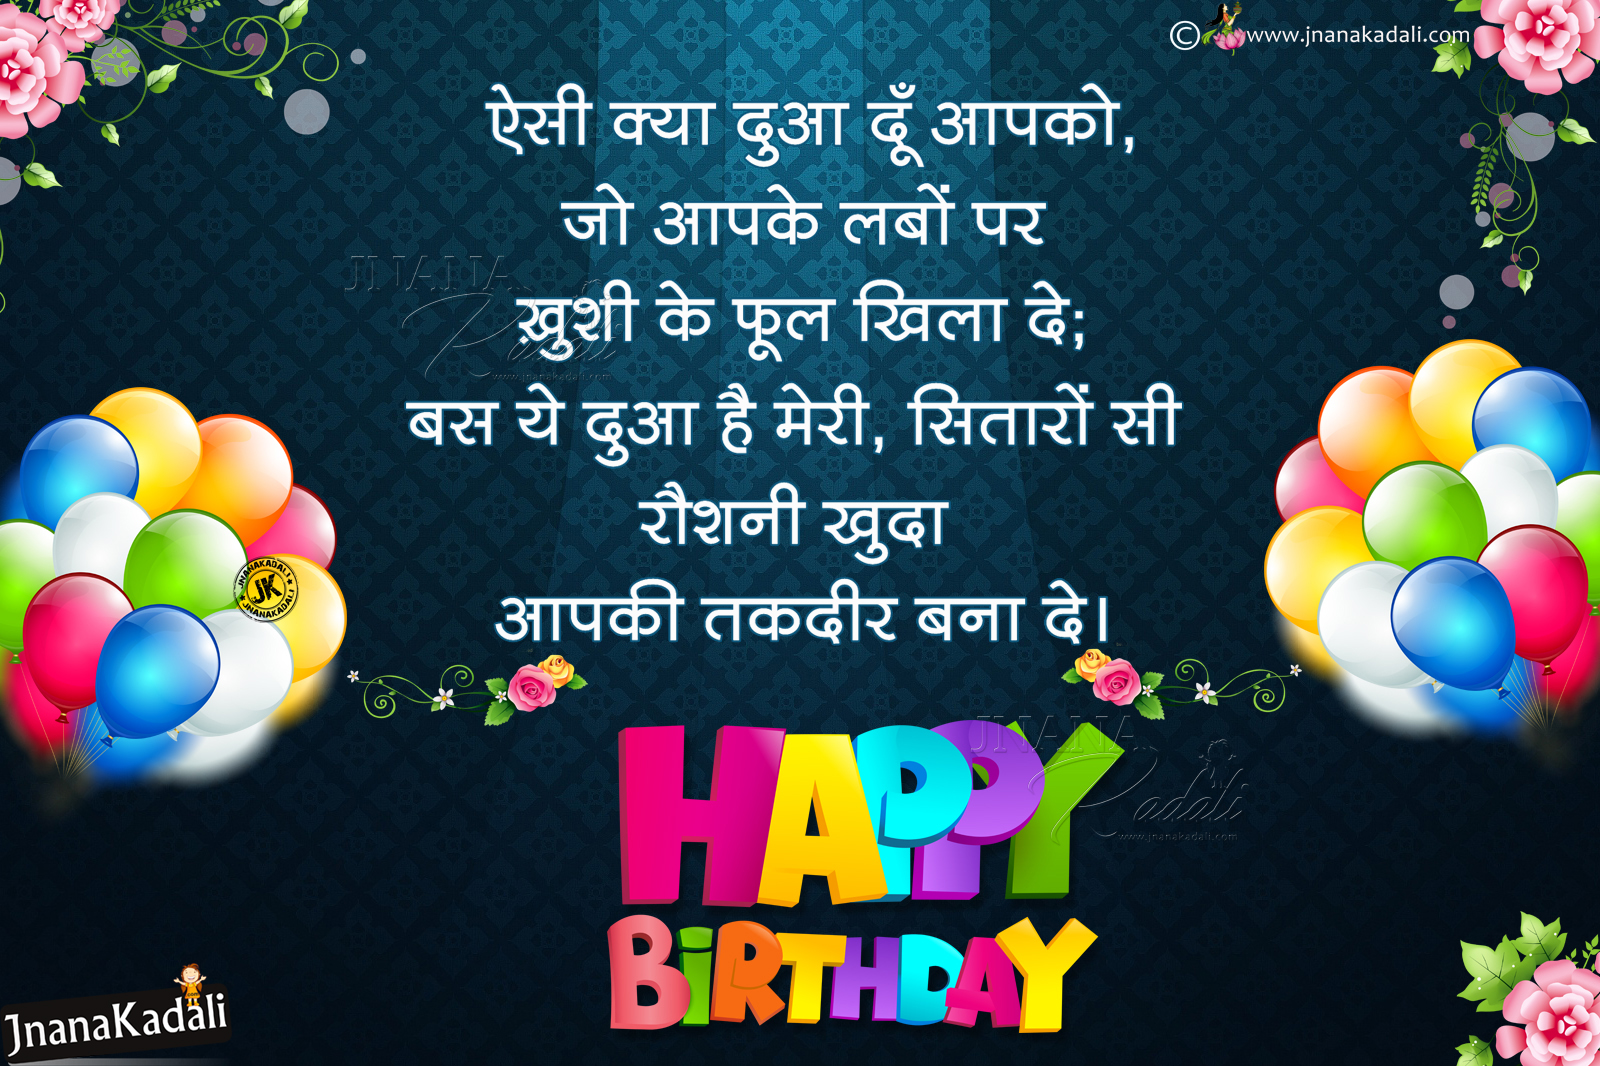 Best Hindi Birthday greetings for FriendHappy Birthday